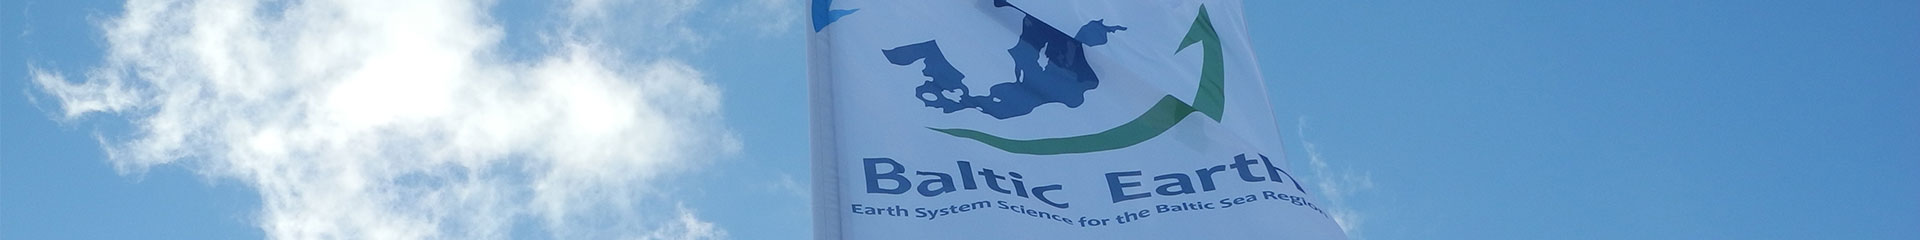 Baltic-earth---panorama---01